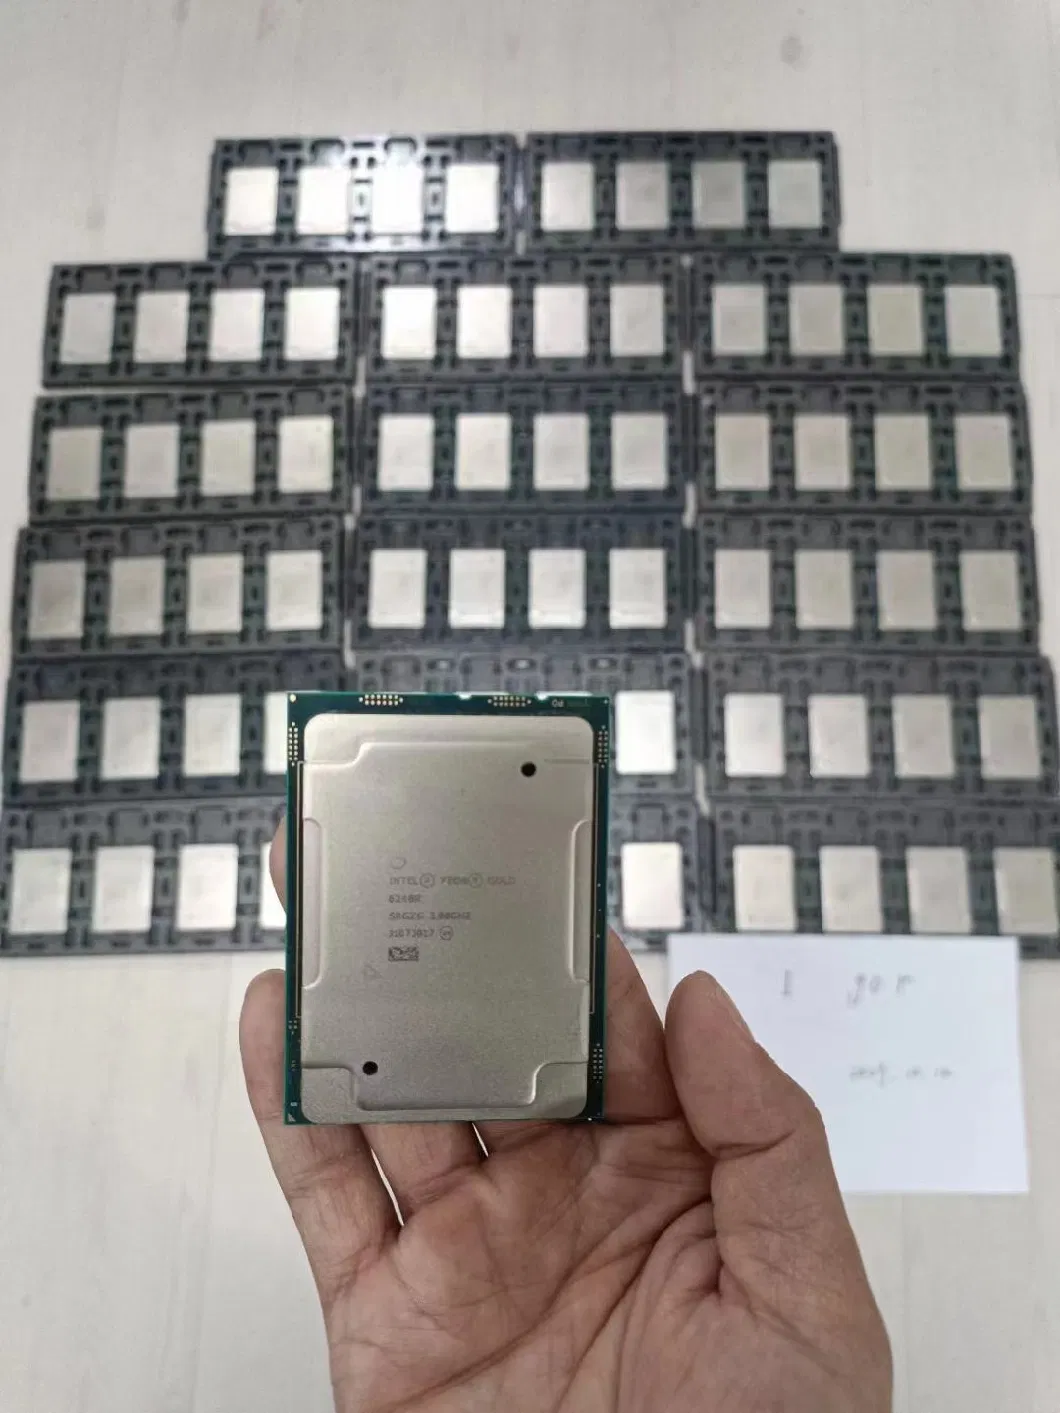 Intel Xeon Processors Platinum Gold Silver Bronze 5315y 5317 5318n 5318y 6326 4310 CPU